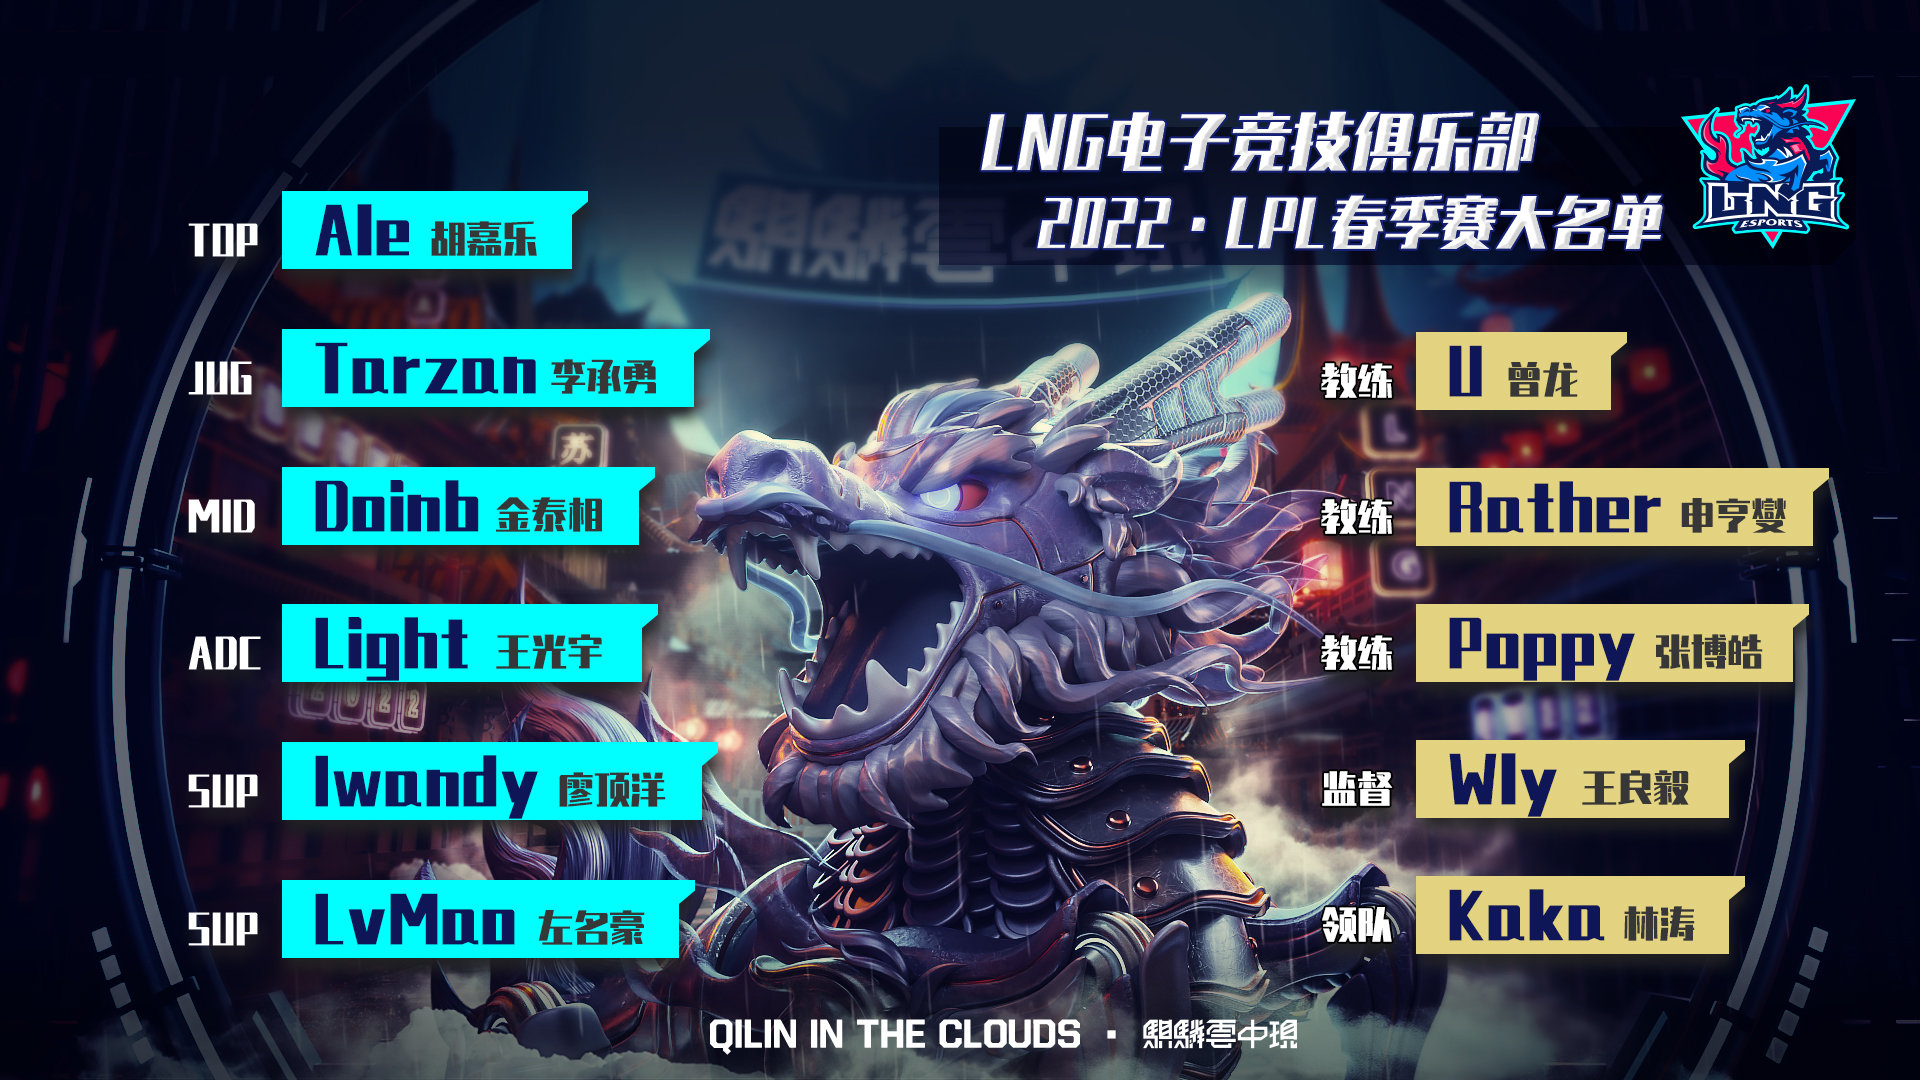 LNG公布新赛季大名单：Doinb担任中单位